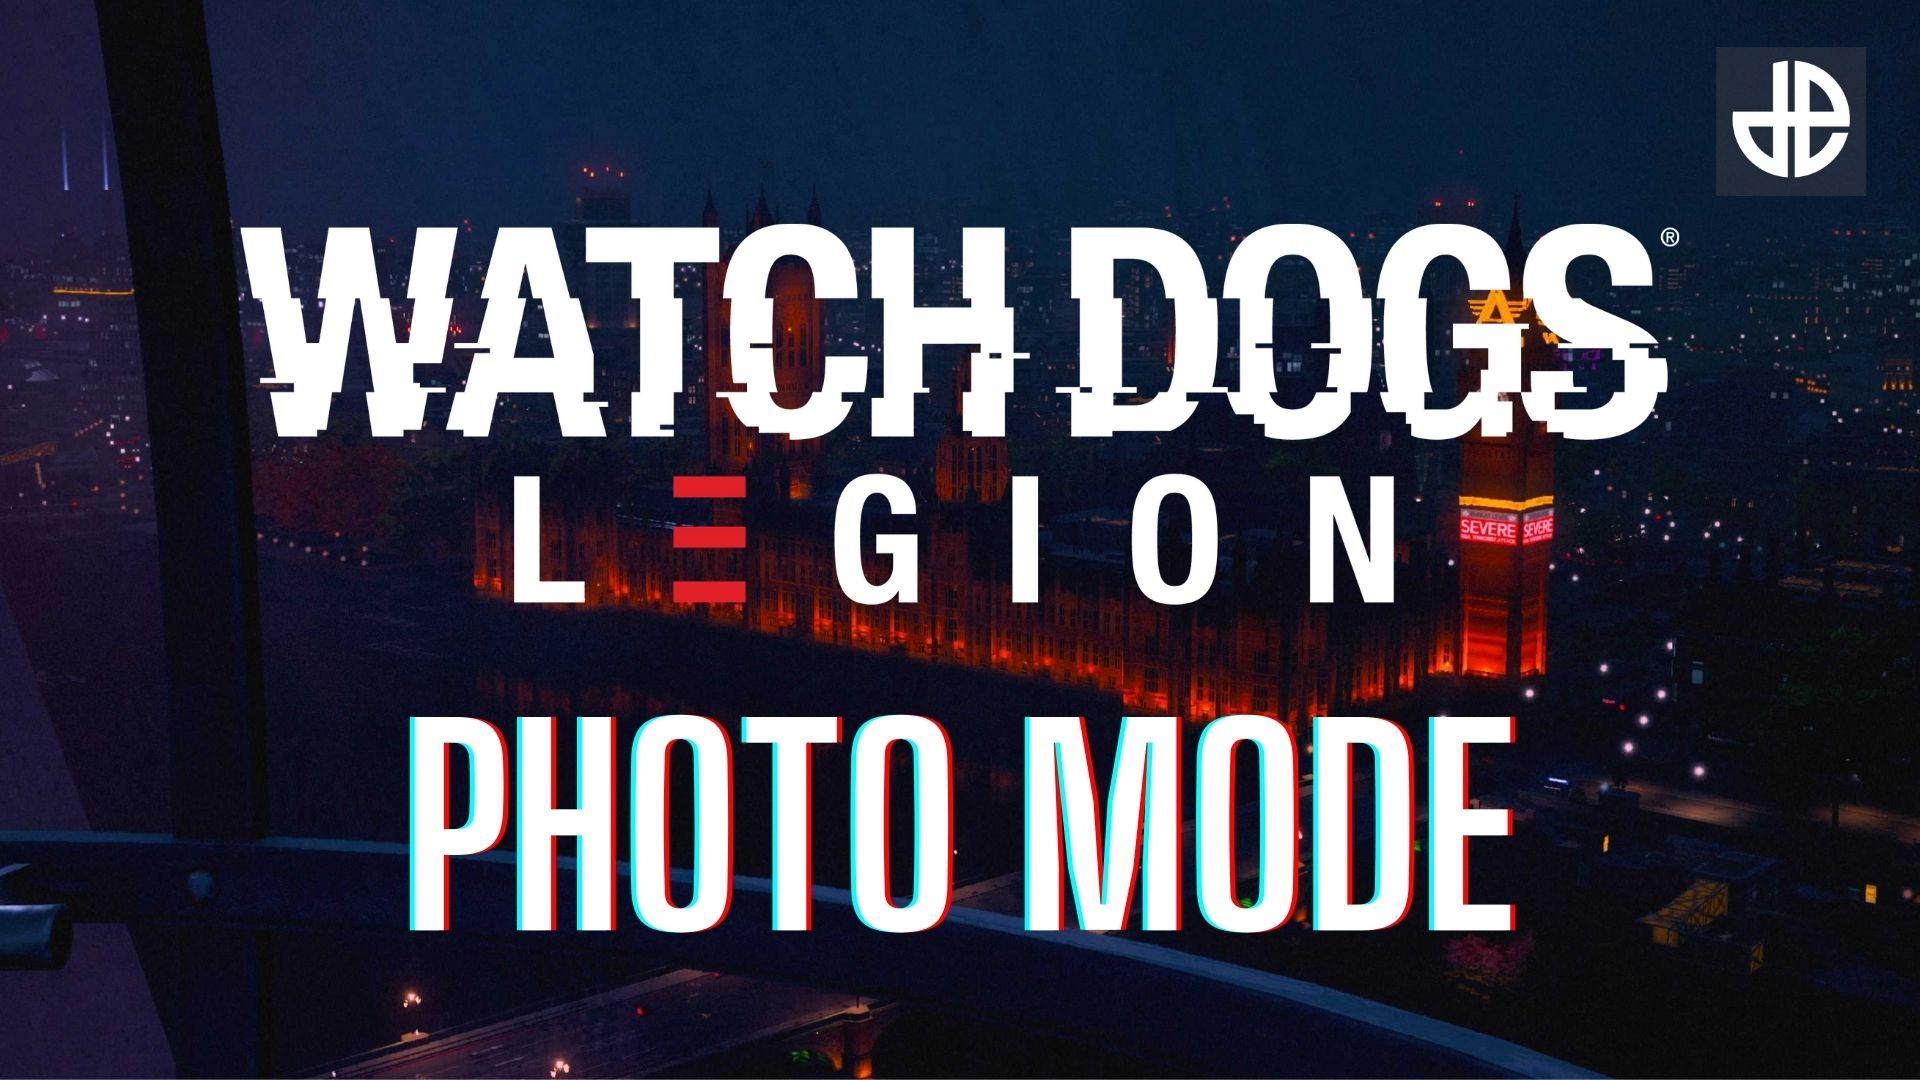 Watch Dogs Legion photo mode